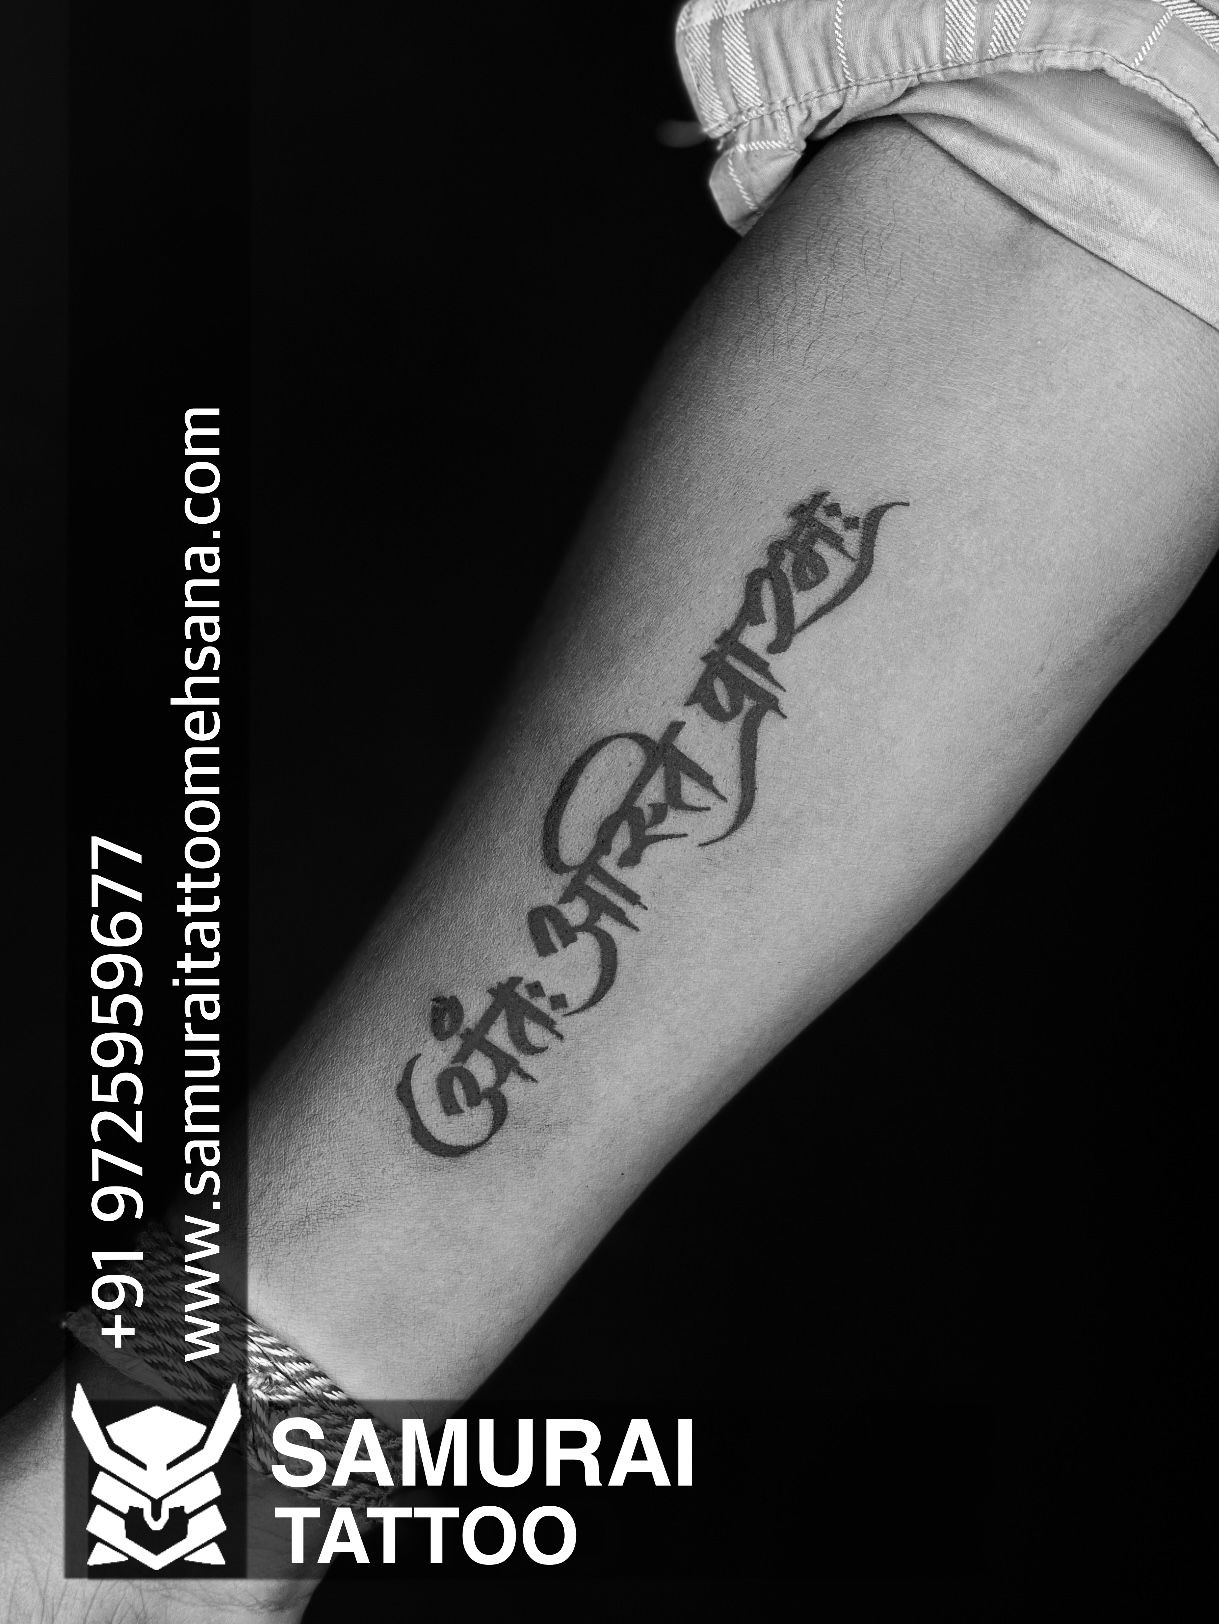 1981 Tattoo - Sanskrit 'breathe' for Perry @darocksalmere #sanskrit  #breathe #sanskrittattoo #blacktattoo #symbolism #symboltattoo #intenzeink  #traveltheworld #crystaloneneedles #darocks #peace #love #jimottenart |  Facebook